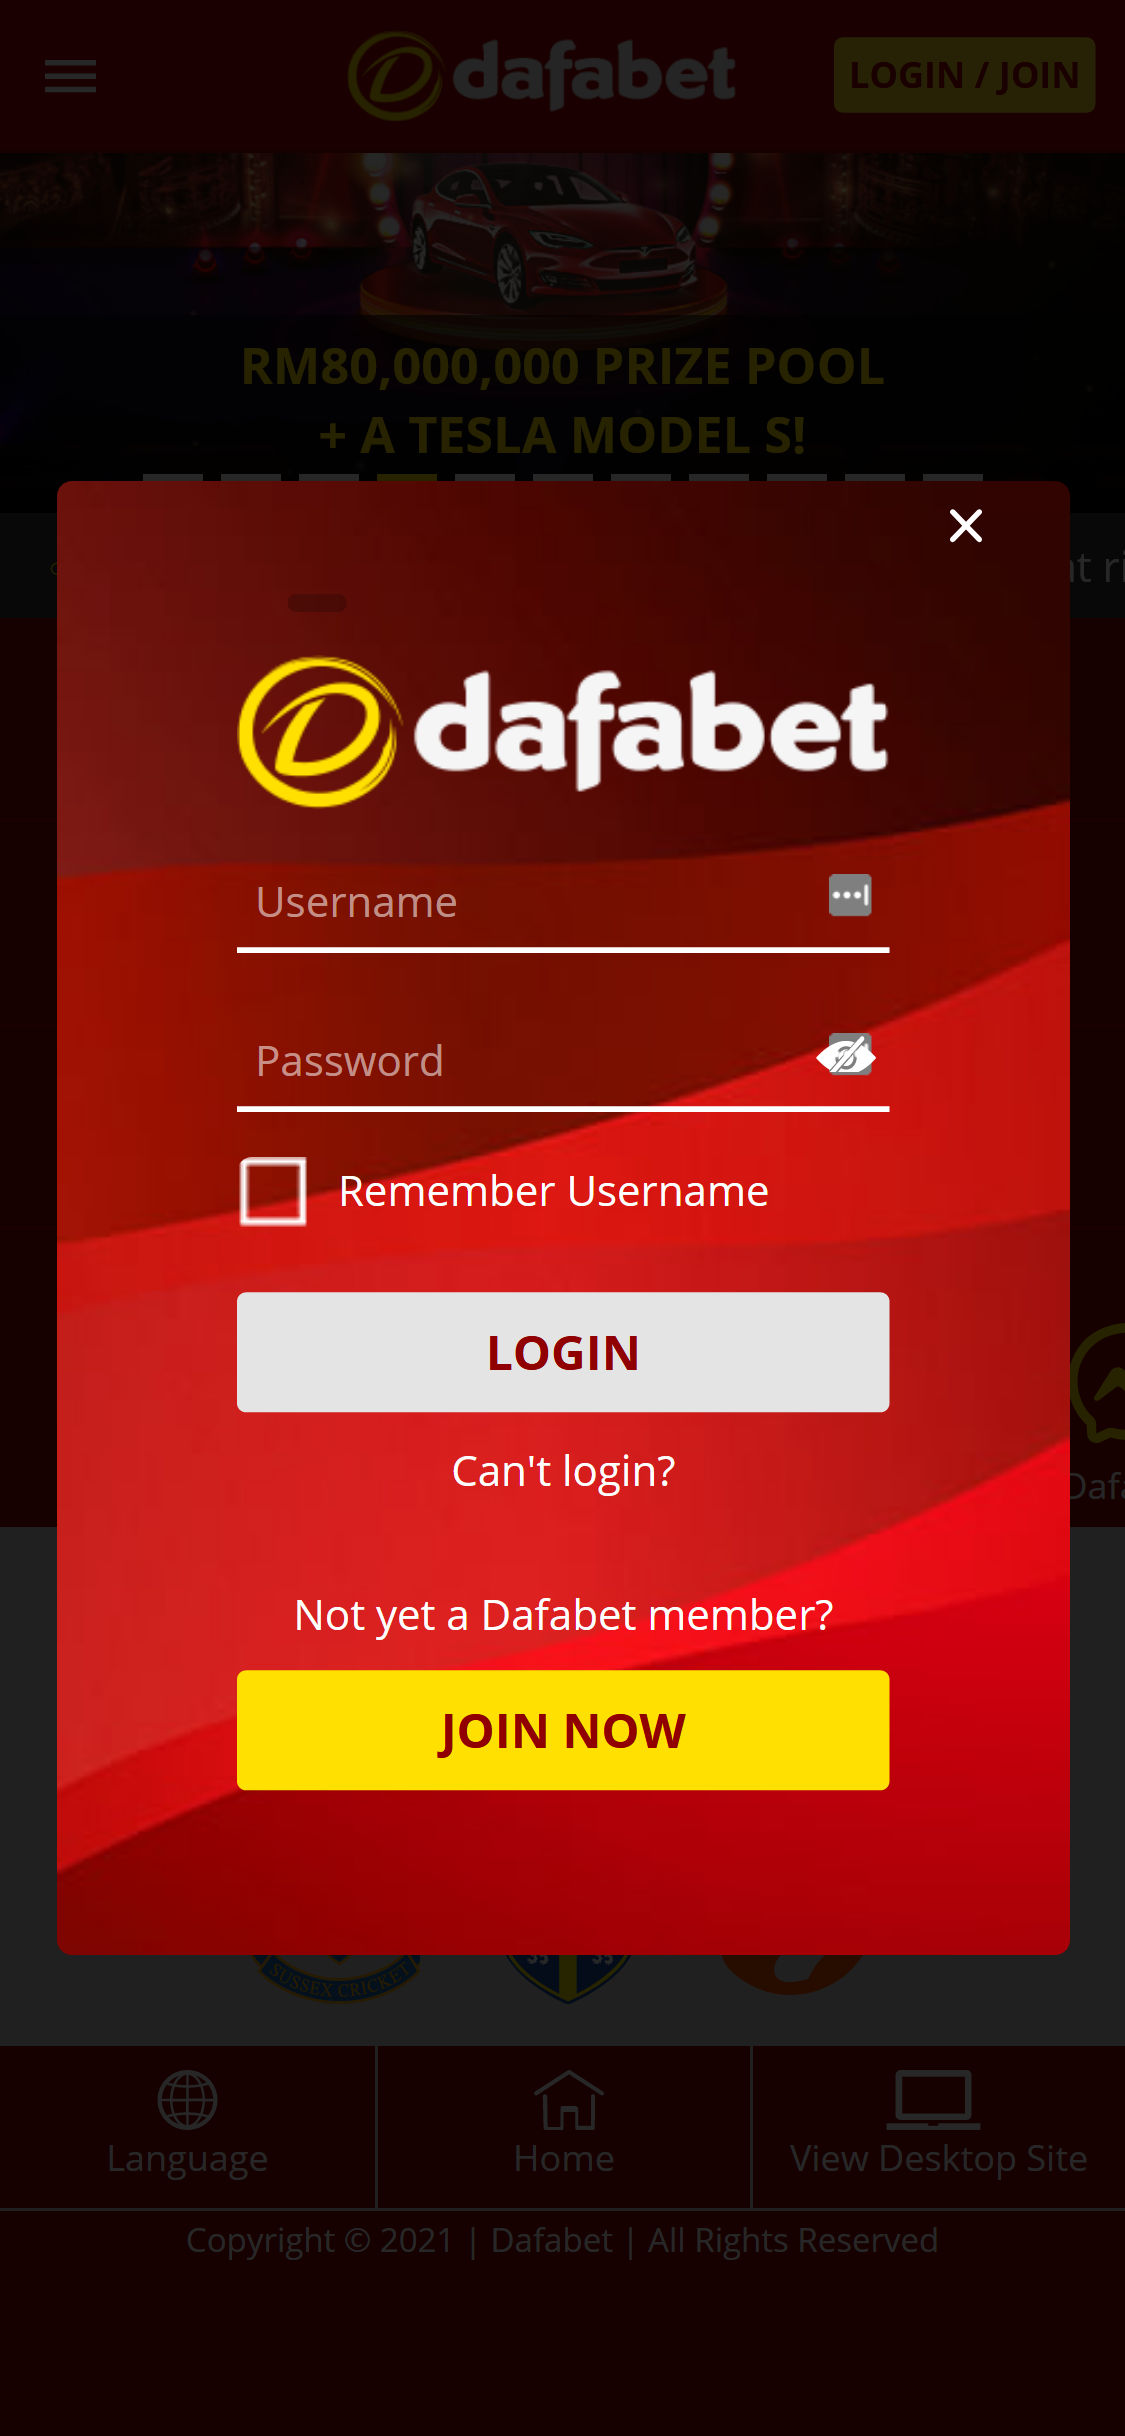 Dafabet 888 Casino Mobile Login Review